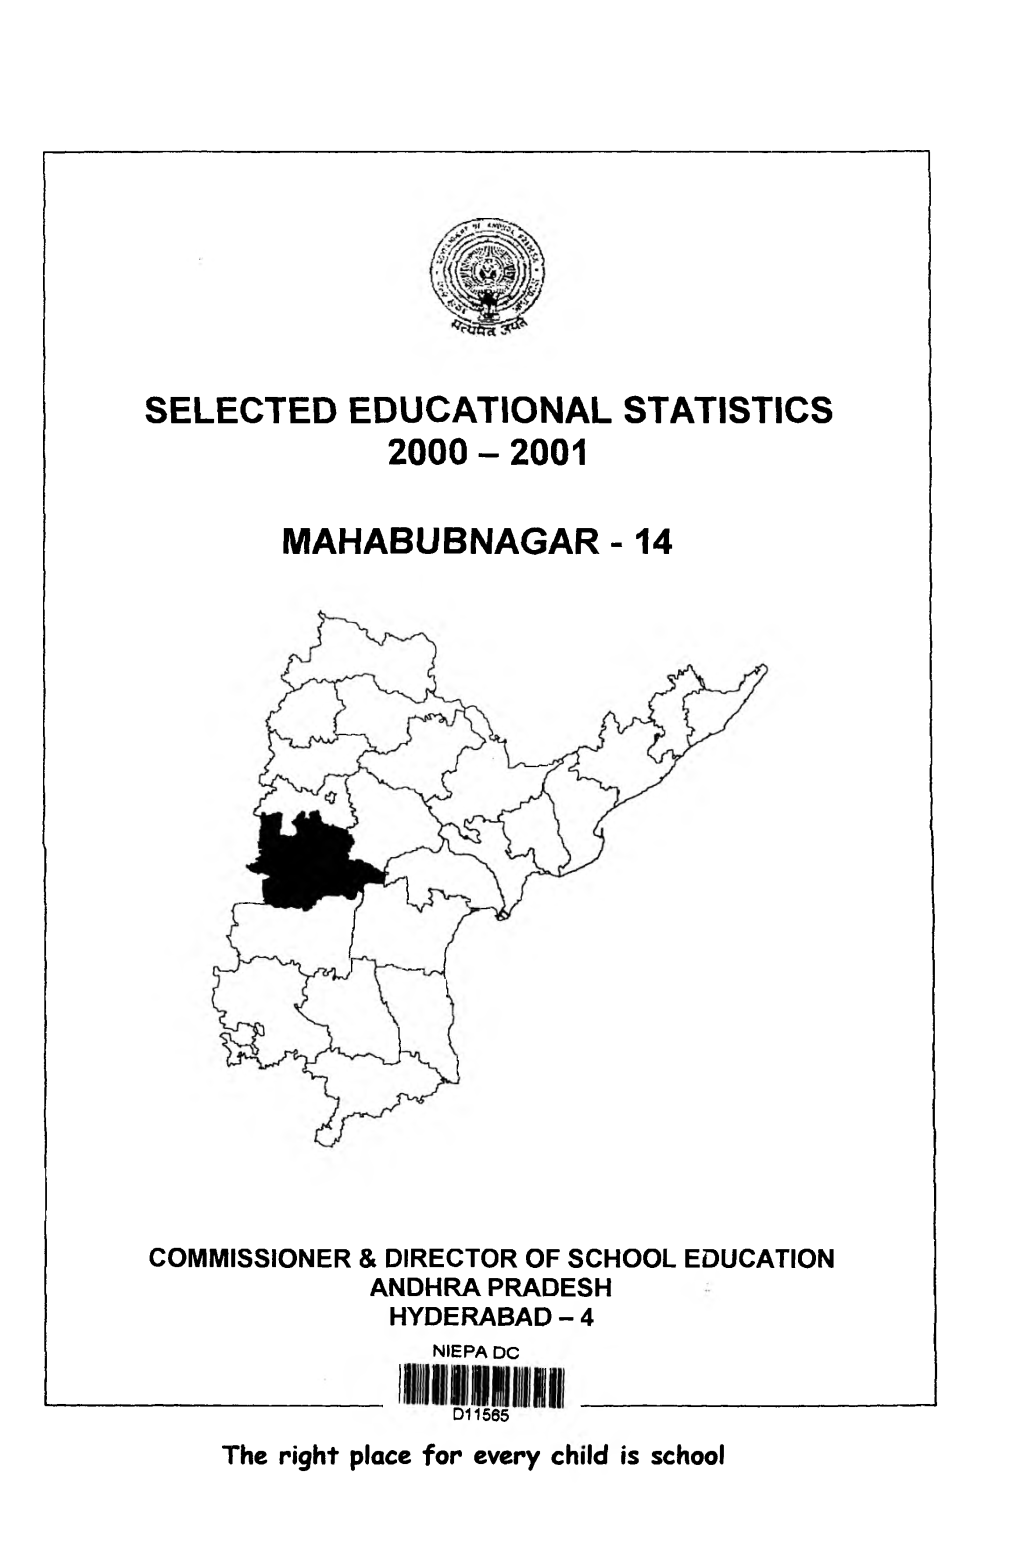 Selected Educational Statistics Mahabubnagar- 14